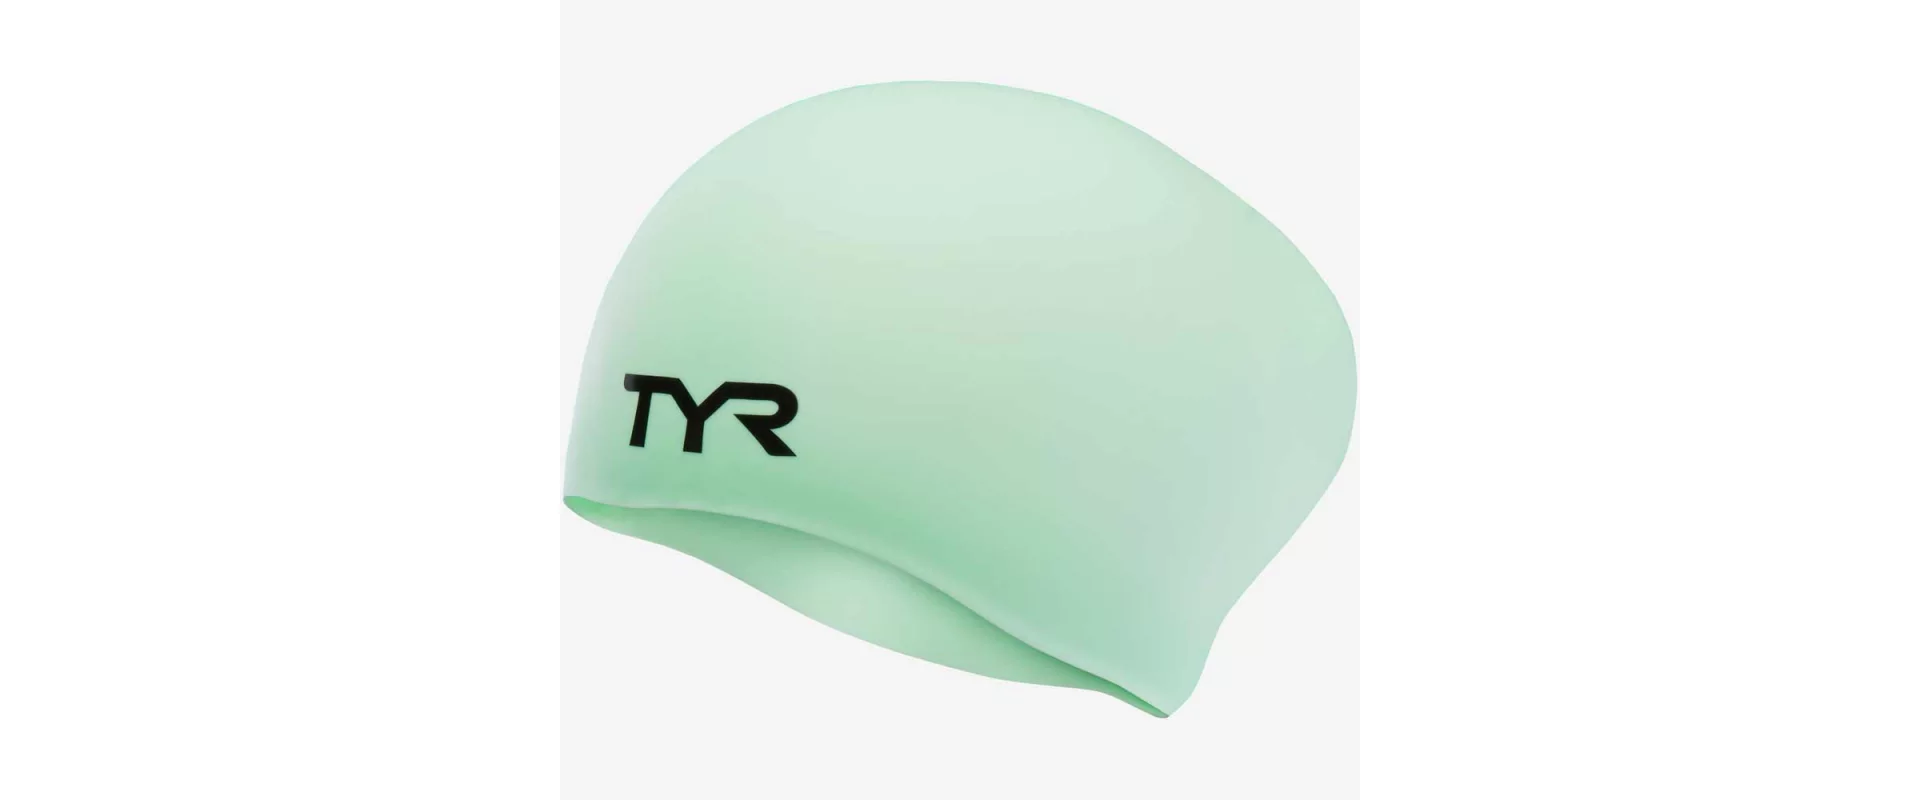 TYR Long Hair Wrinkle-Free Silicone Cap / Шапочка для длинных волос силиконовая фото 1